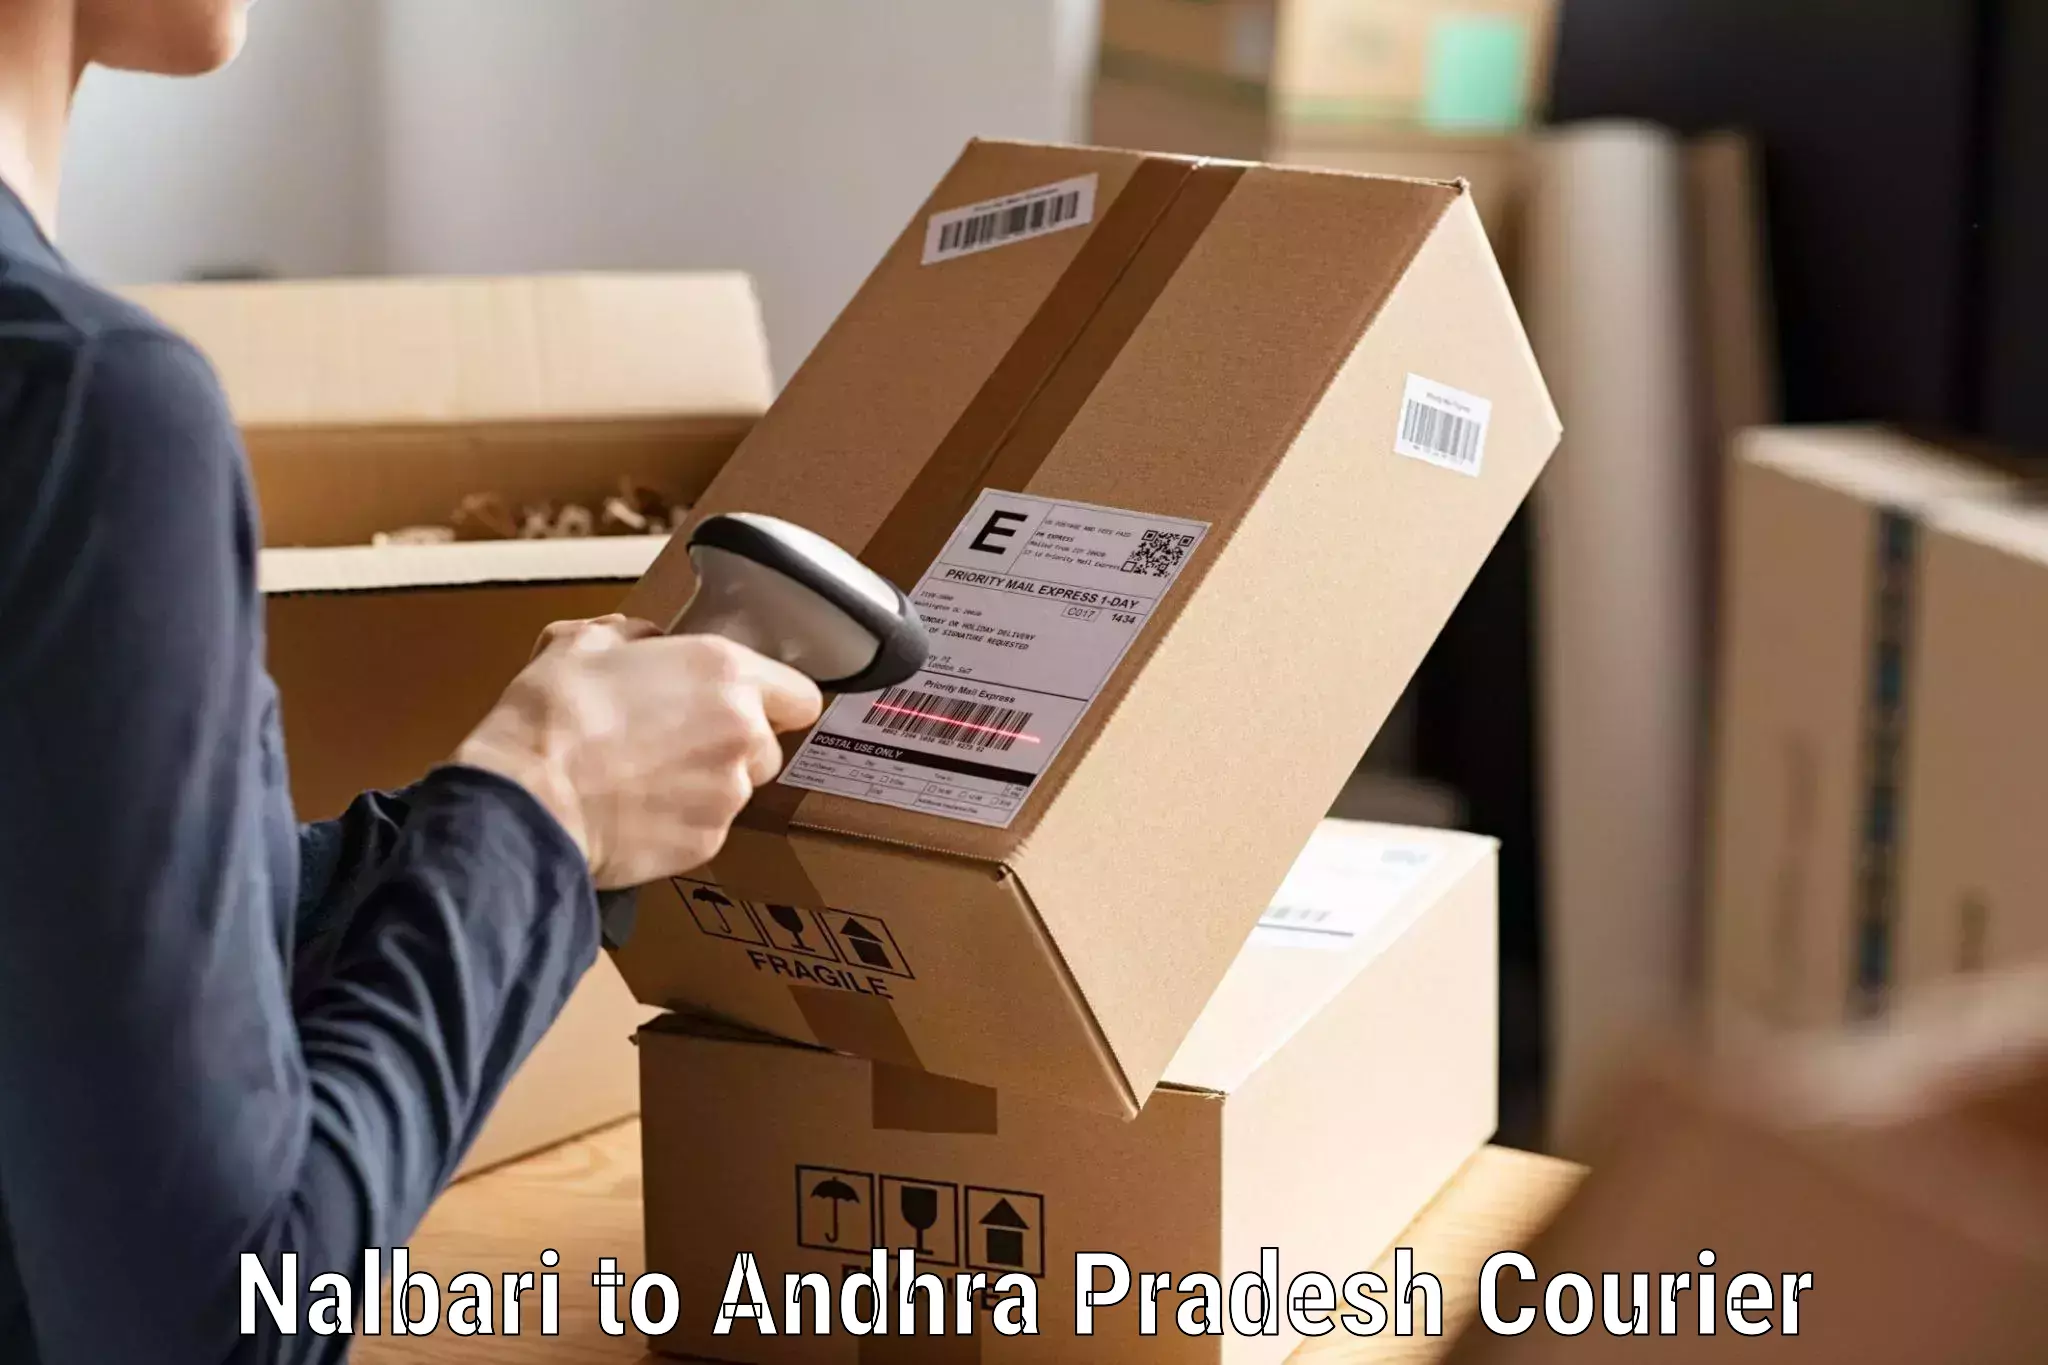 State-of-the-art courier technology Nalbari to Avanigadda